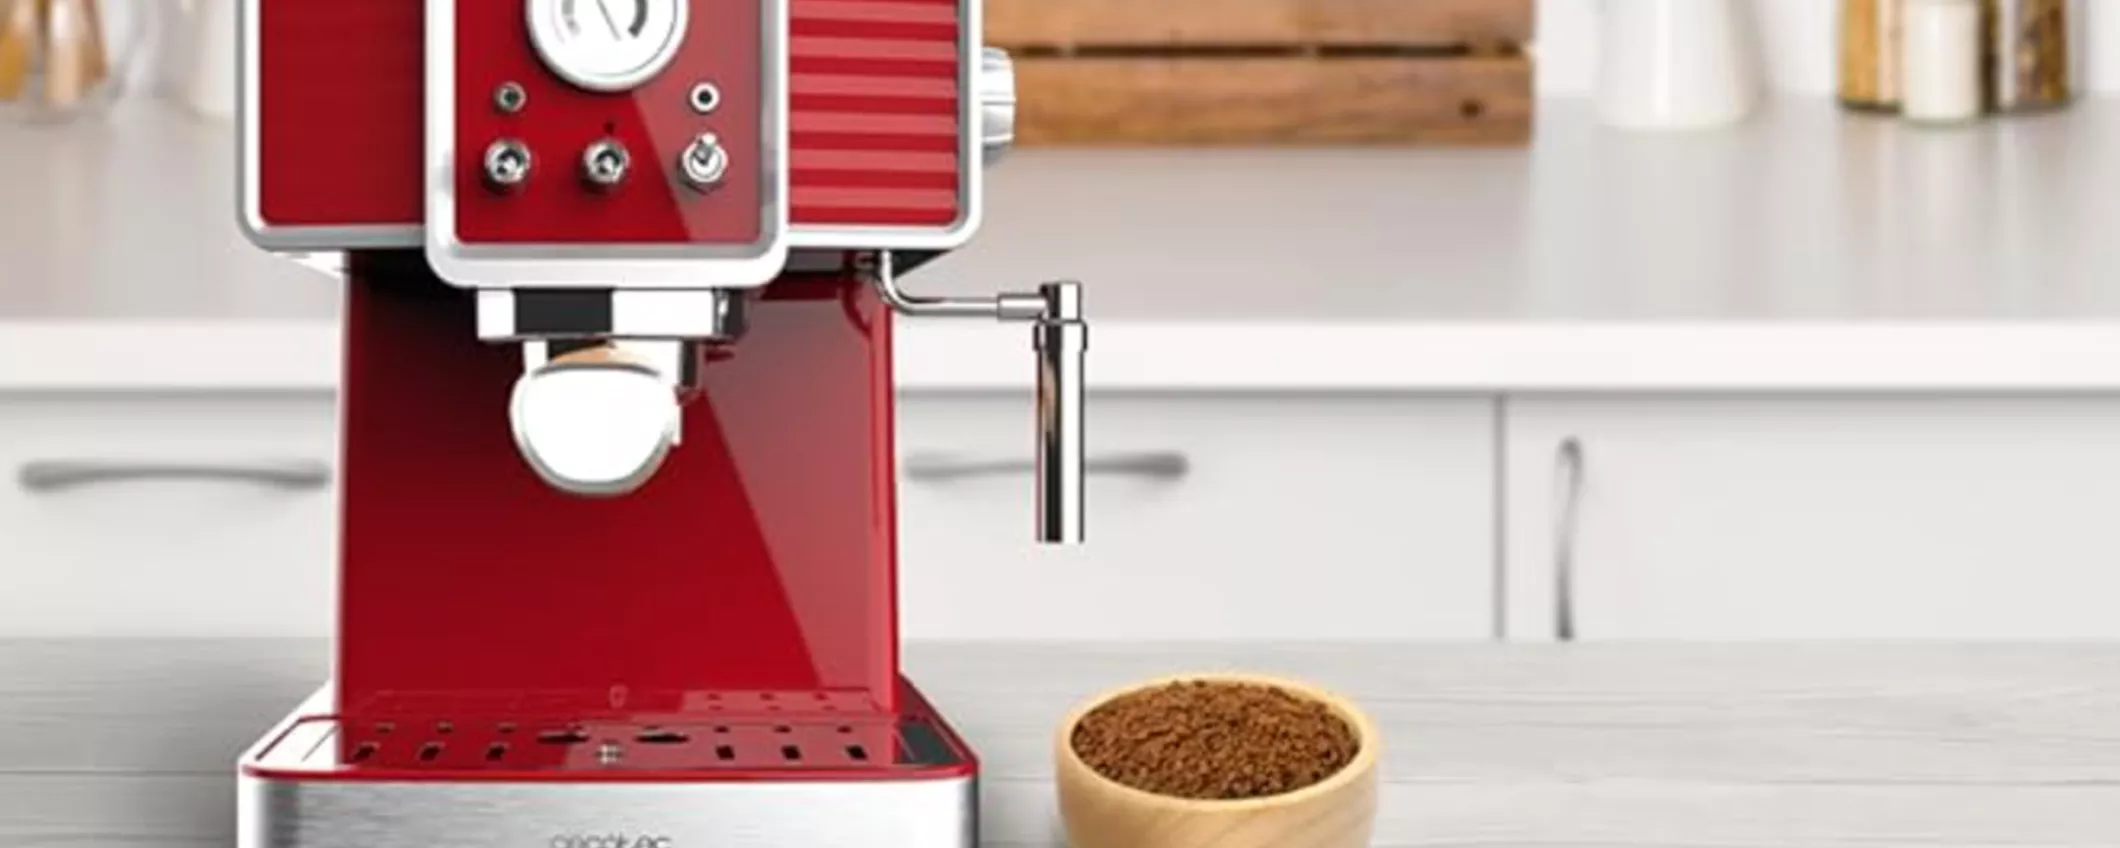 Macchina da caffè espresso Cecotech da 1350W in offerta a 99,90€ su Amazon